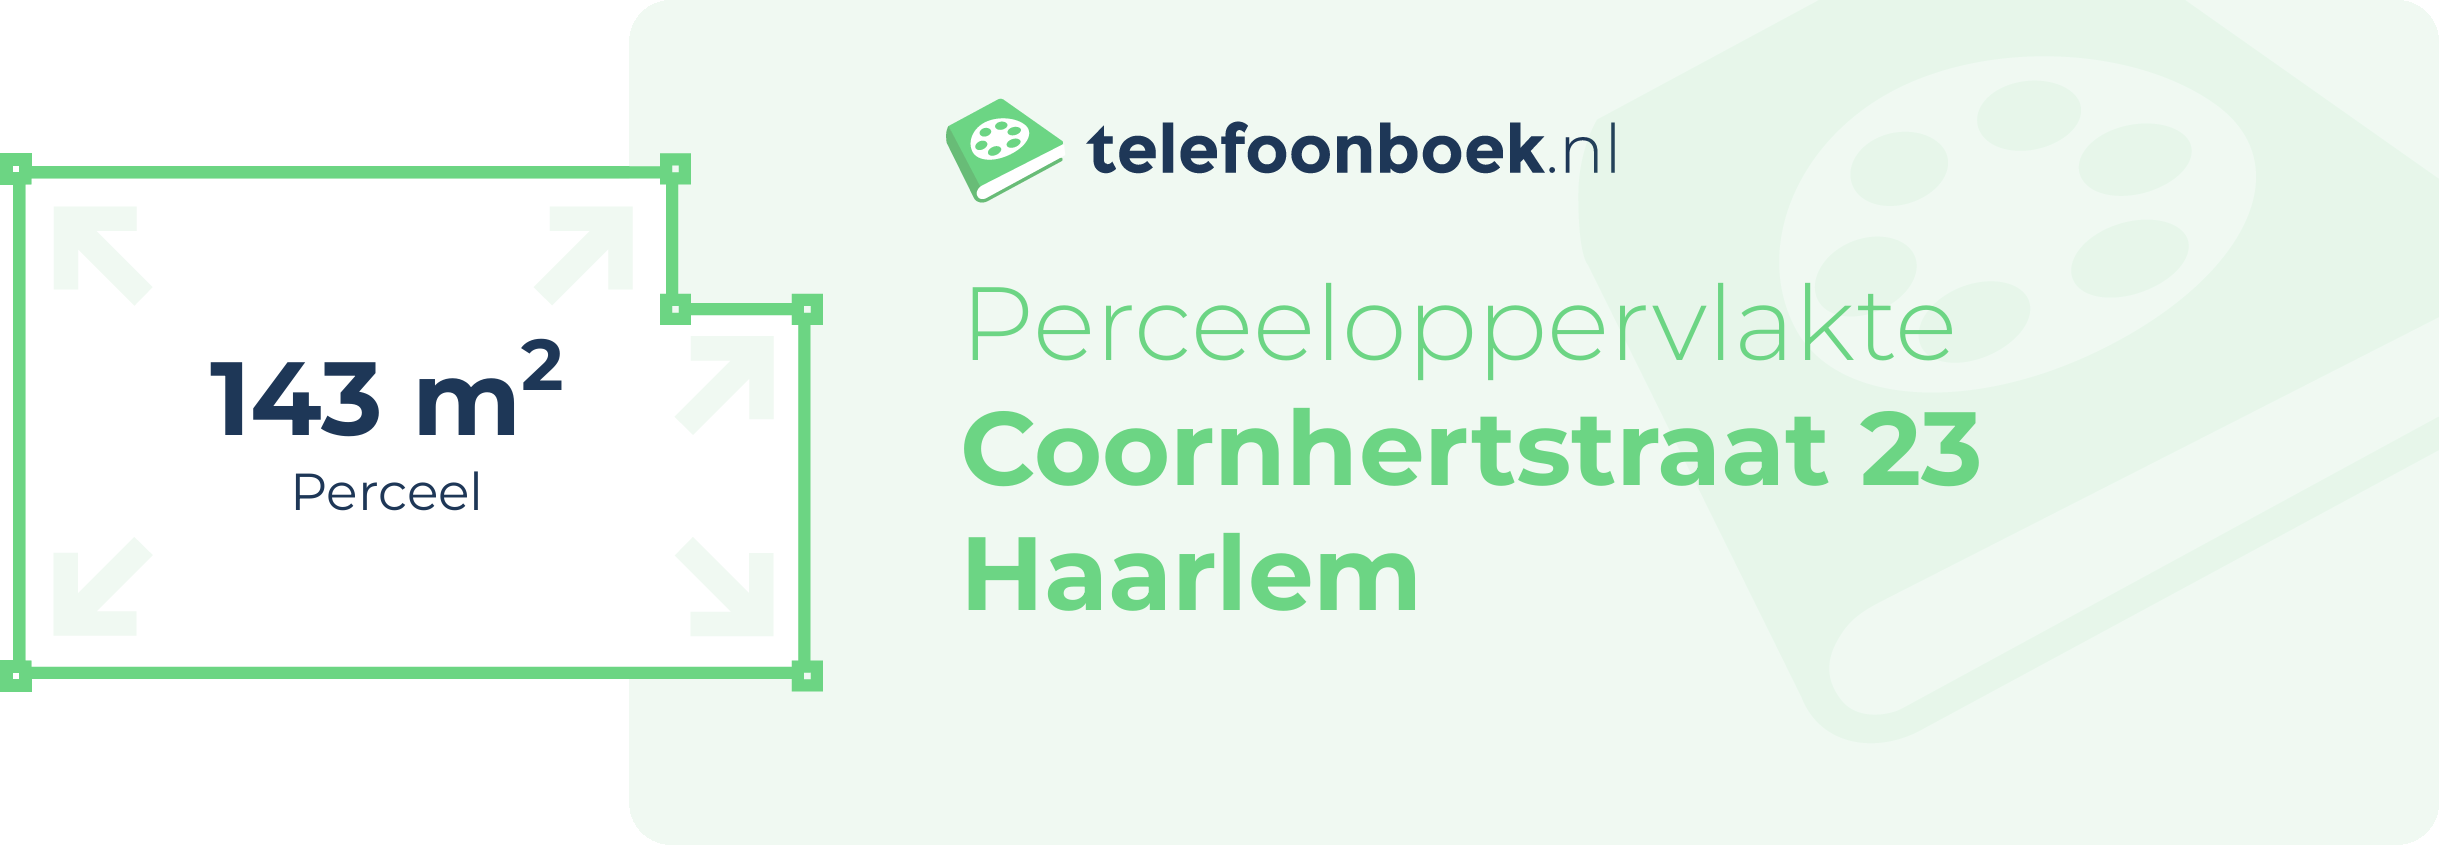 Perceeloppervlakte Coornhertstraat 23 Haarlem